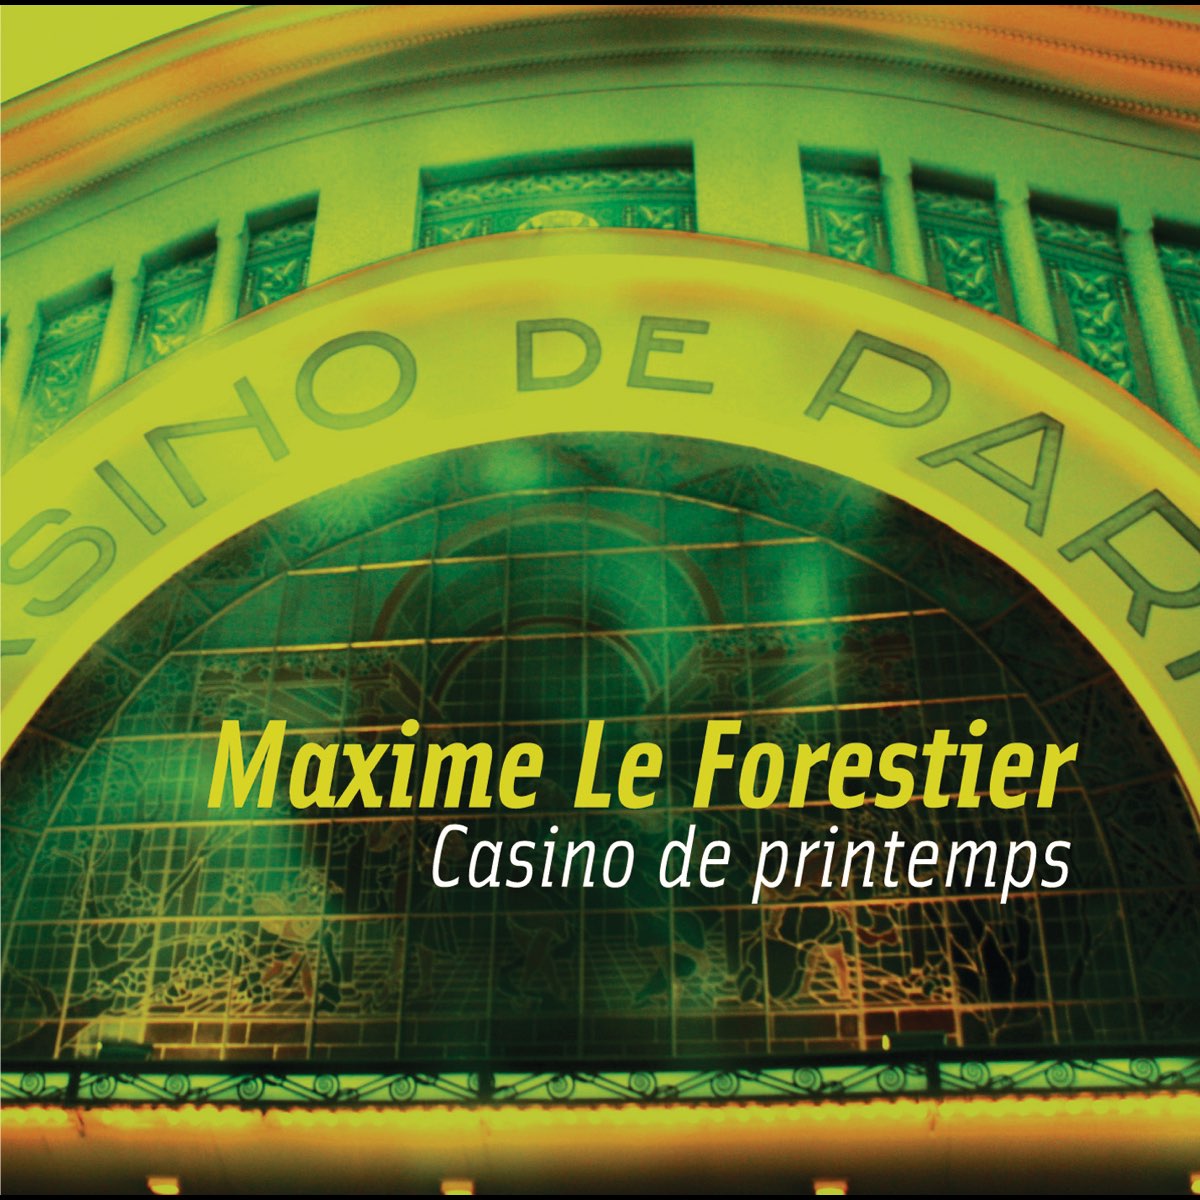 Casino de printemps by Maxime Le Forestier on Apple Music